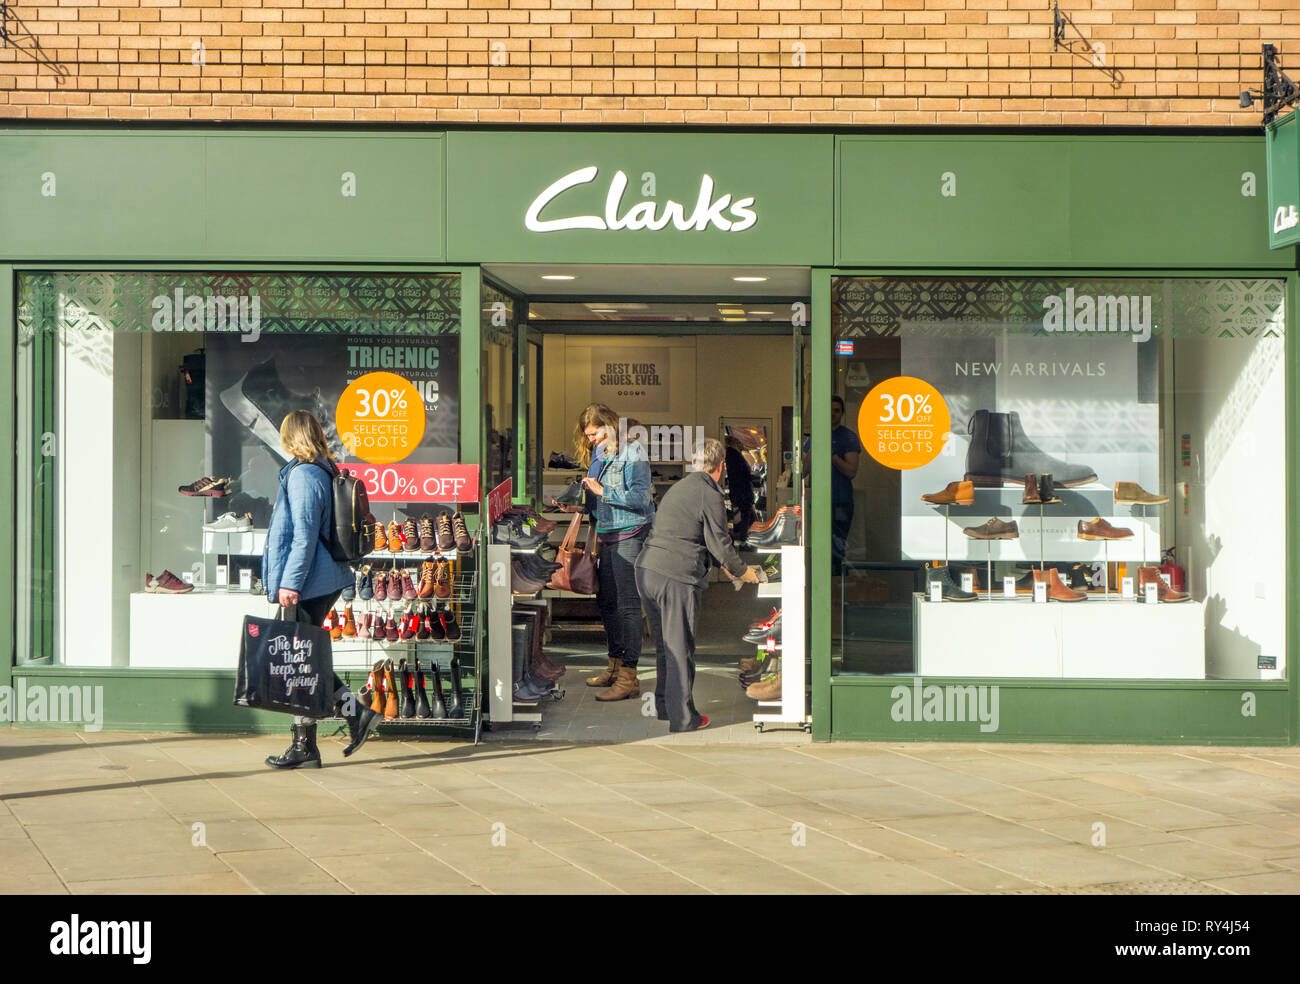 clarks shoe shops dublin